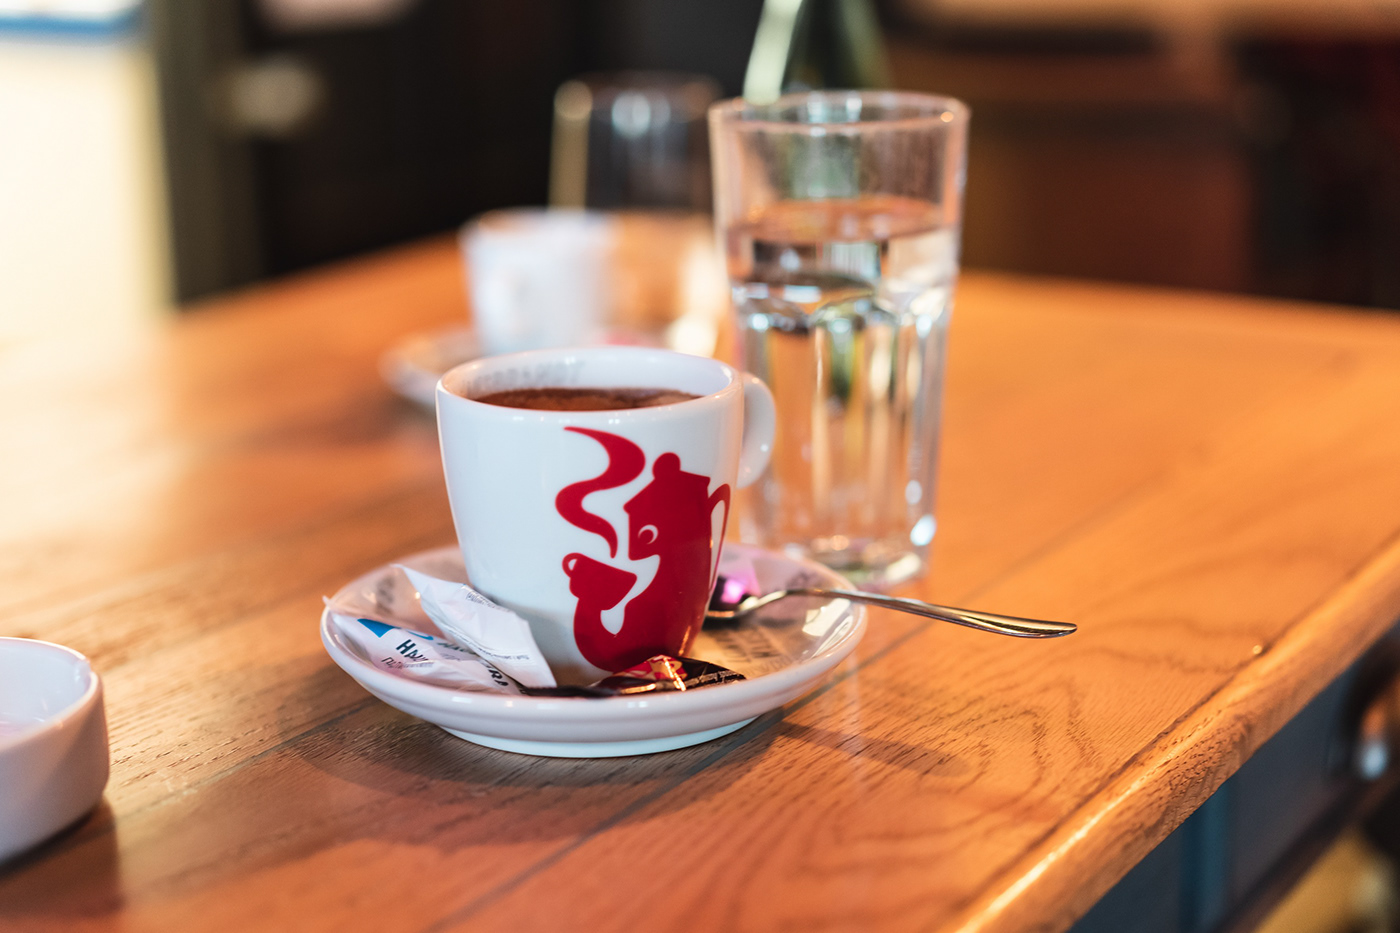 Coffee coffeeshop ItalianCoffee espresso sonyalpha socialmediaphotography instashot